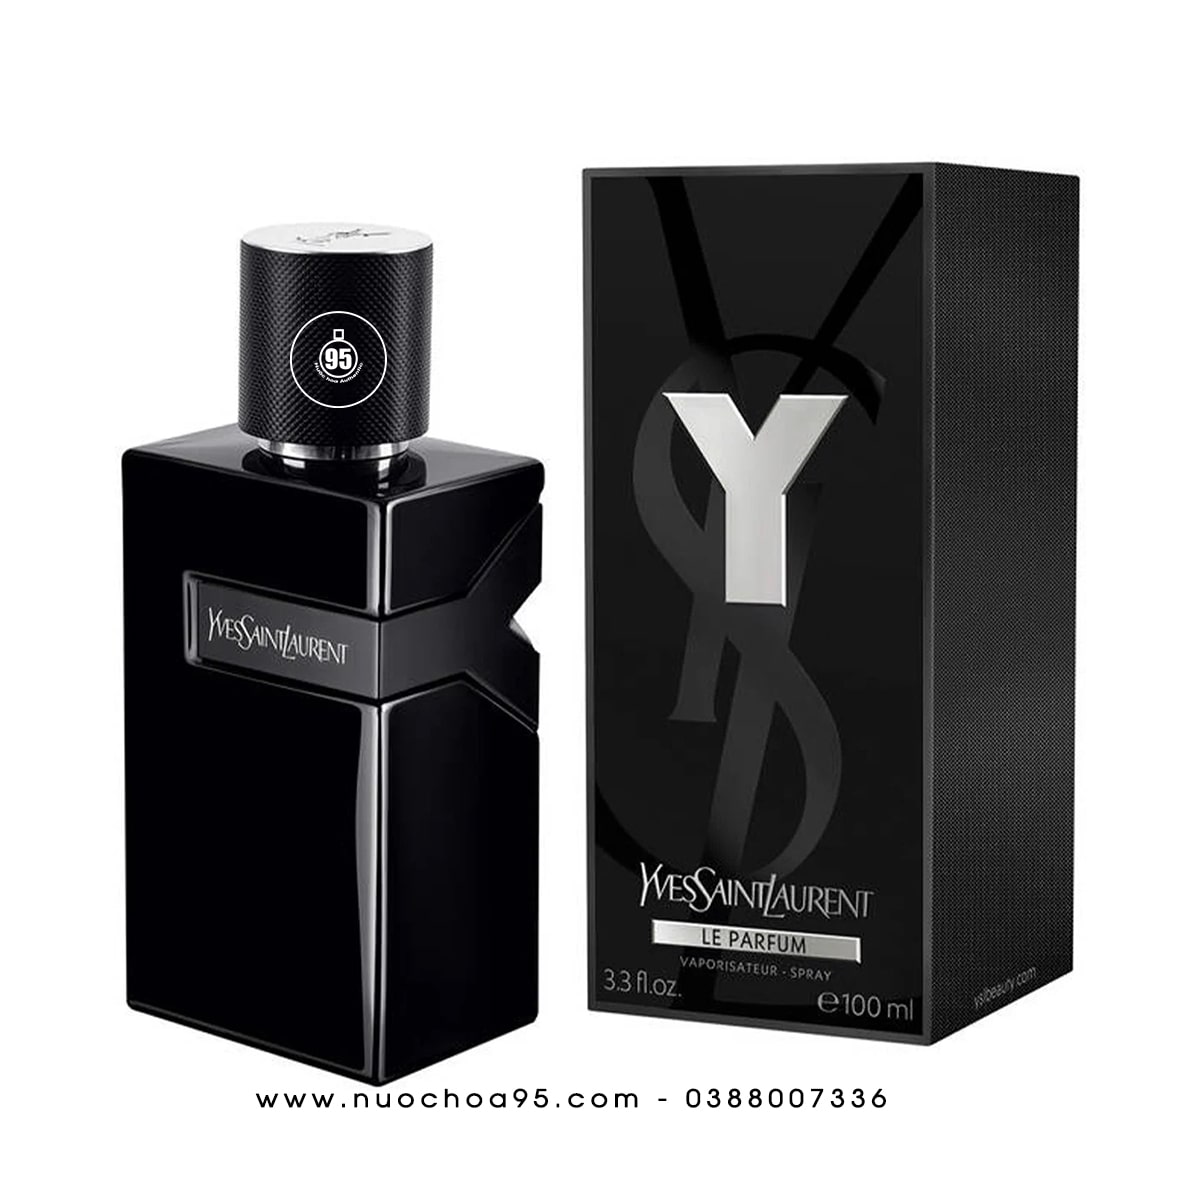 Nước hoa Yves Saint Laurent Y Le Parfum